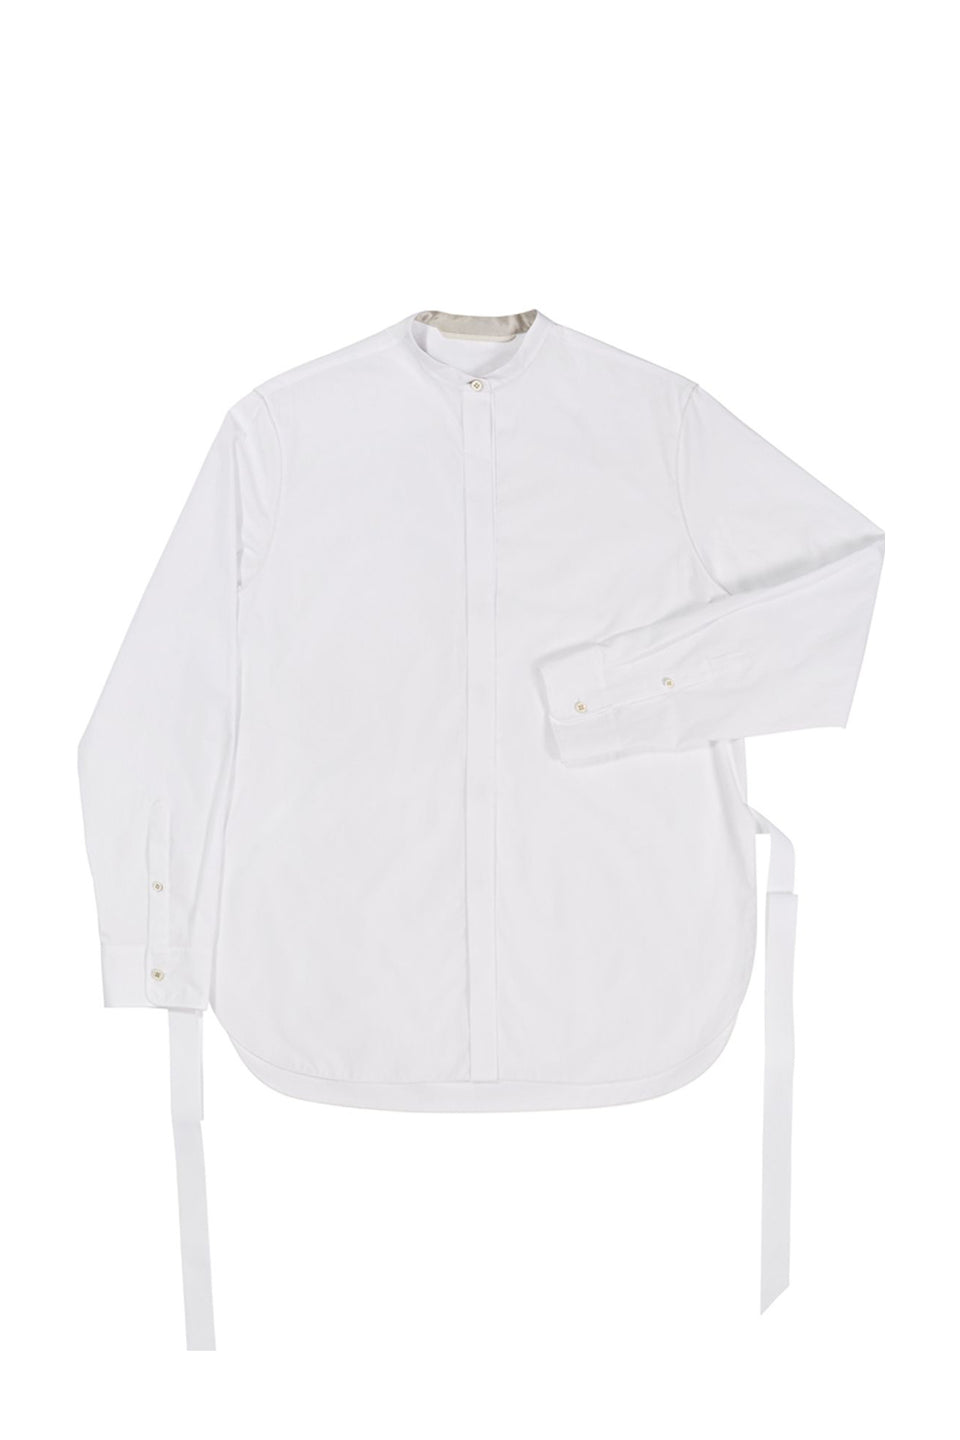 The Essential Shirt - White (listing page thumbnail)